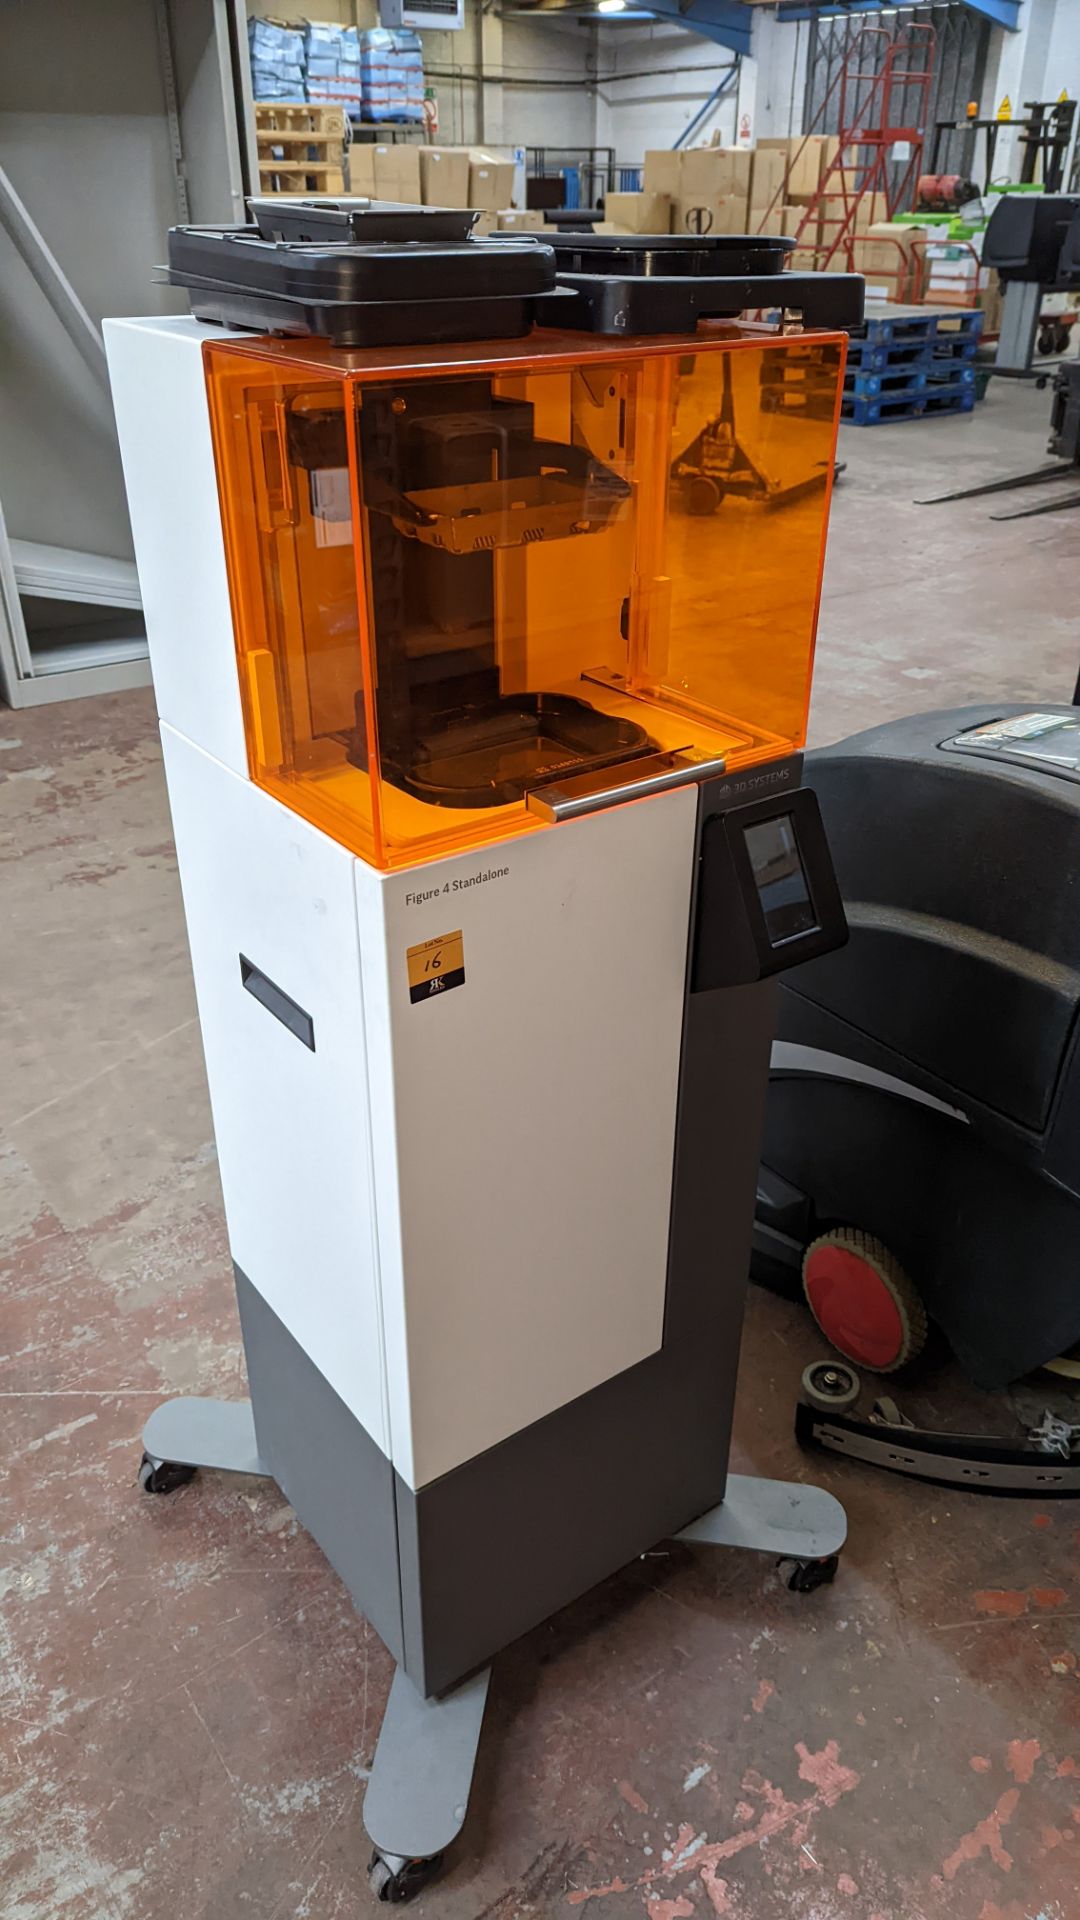 3D Systems Figure 4 Standalone 3D printer